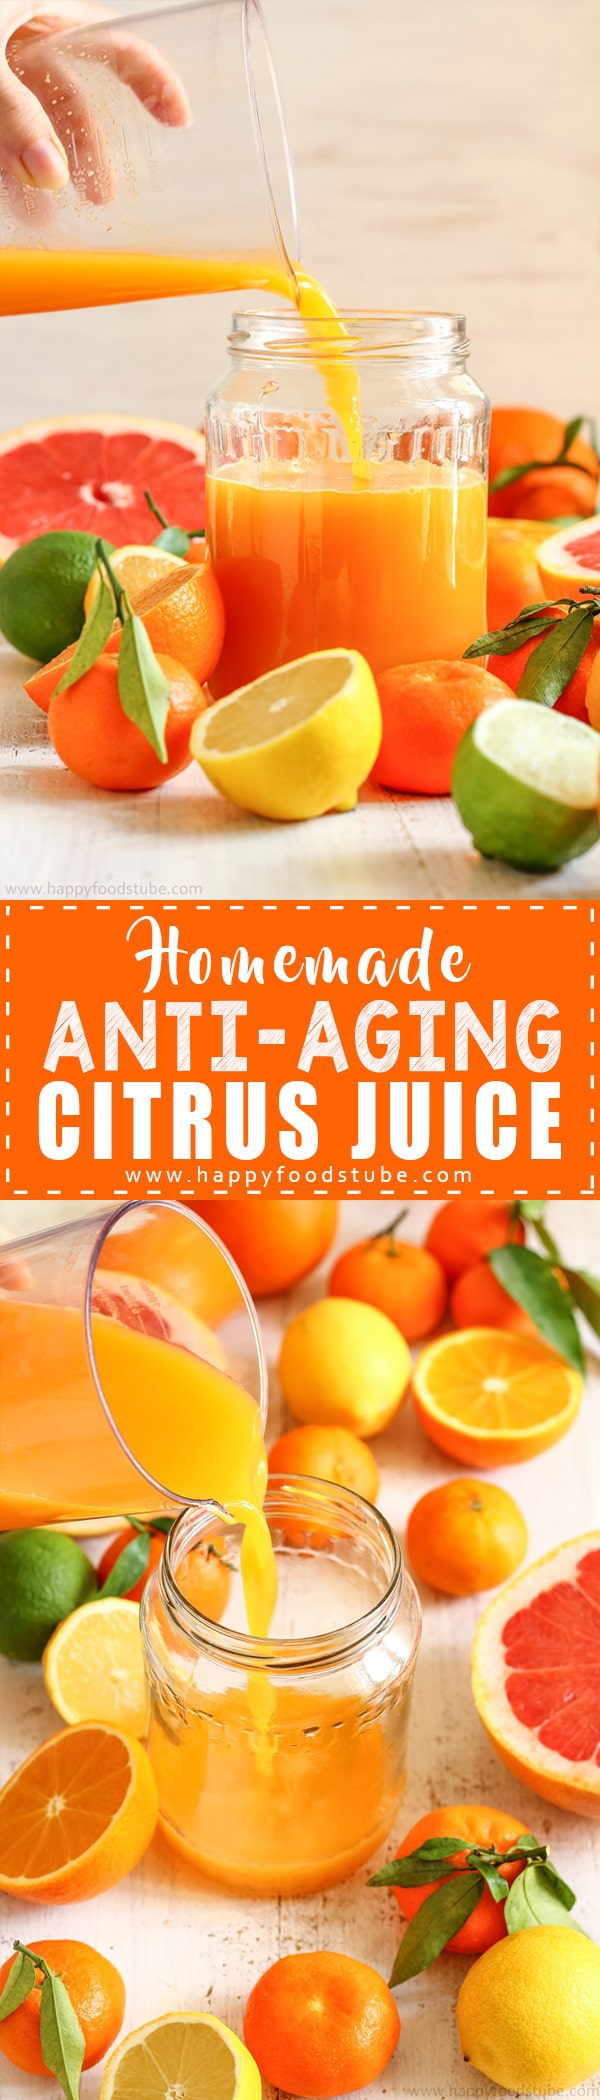 nasa anti aging juice recept